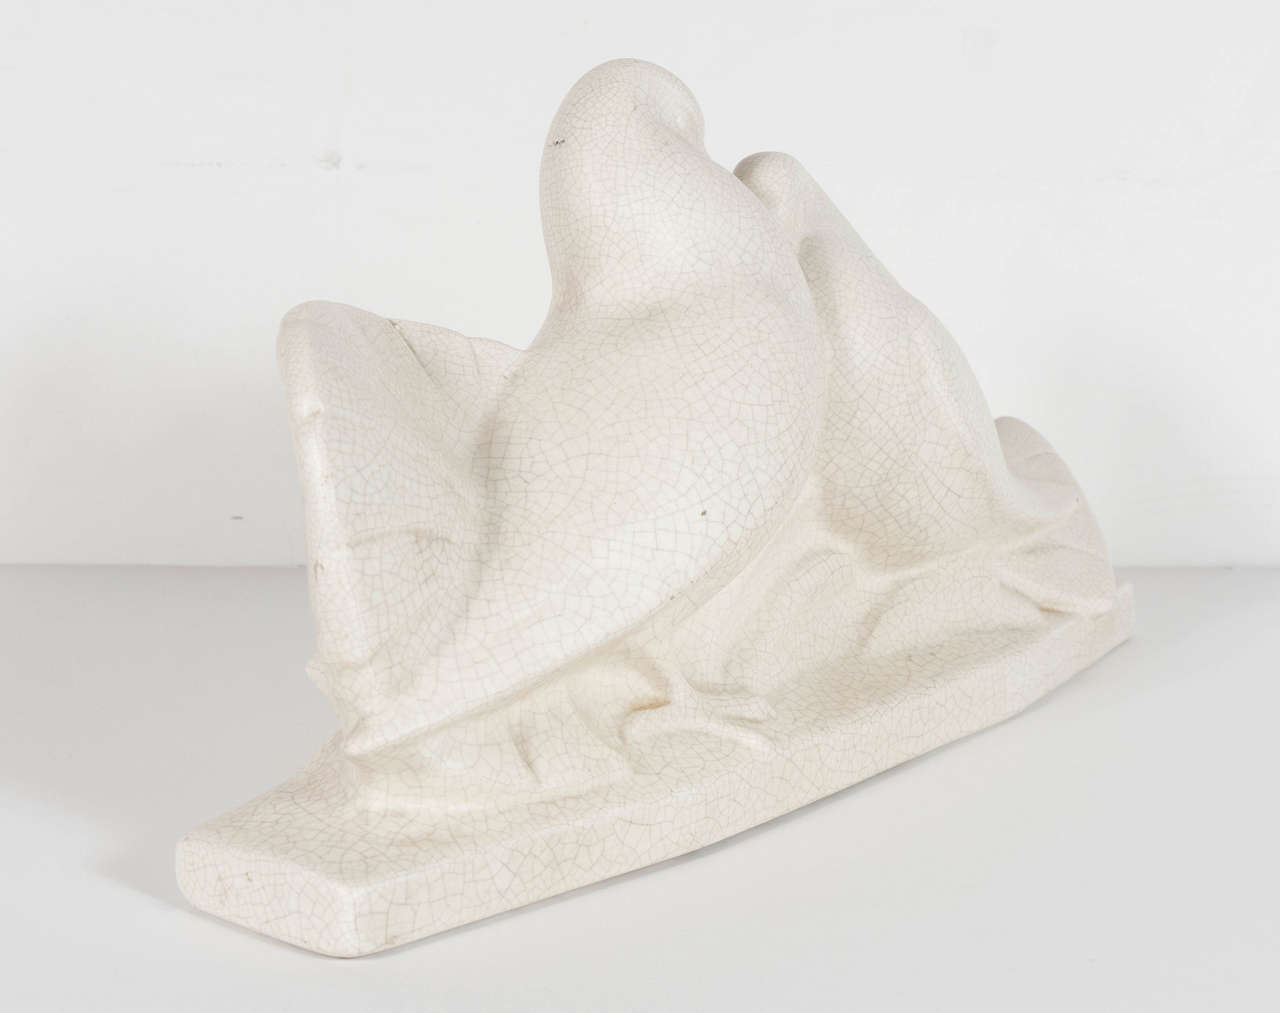 Exquisite Art Deco Crackle Ceramic Doves Sculpture by Dax 2